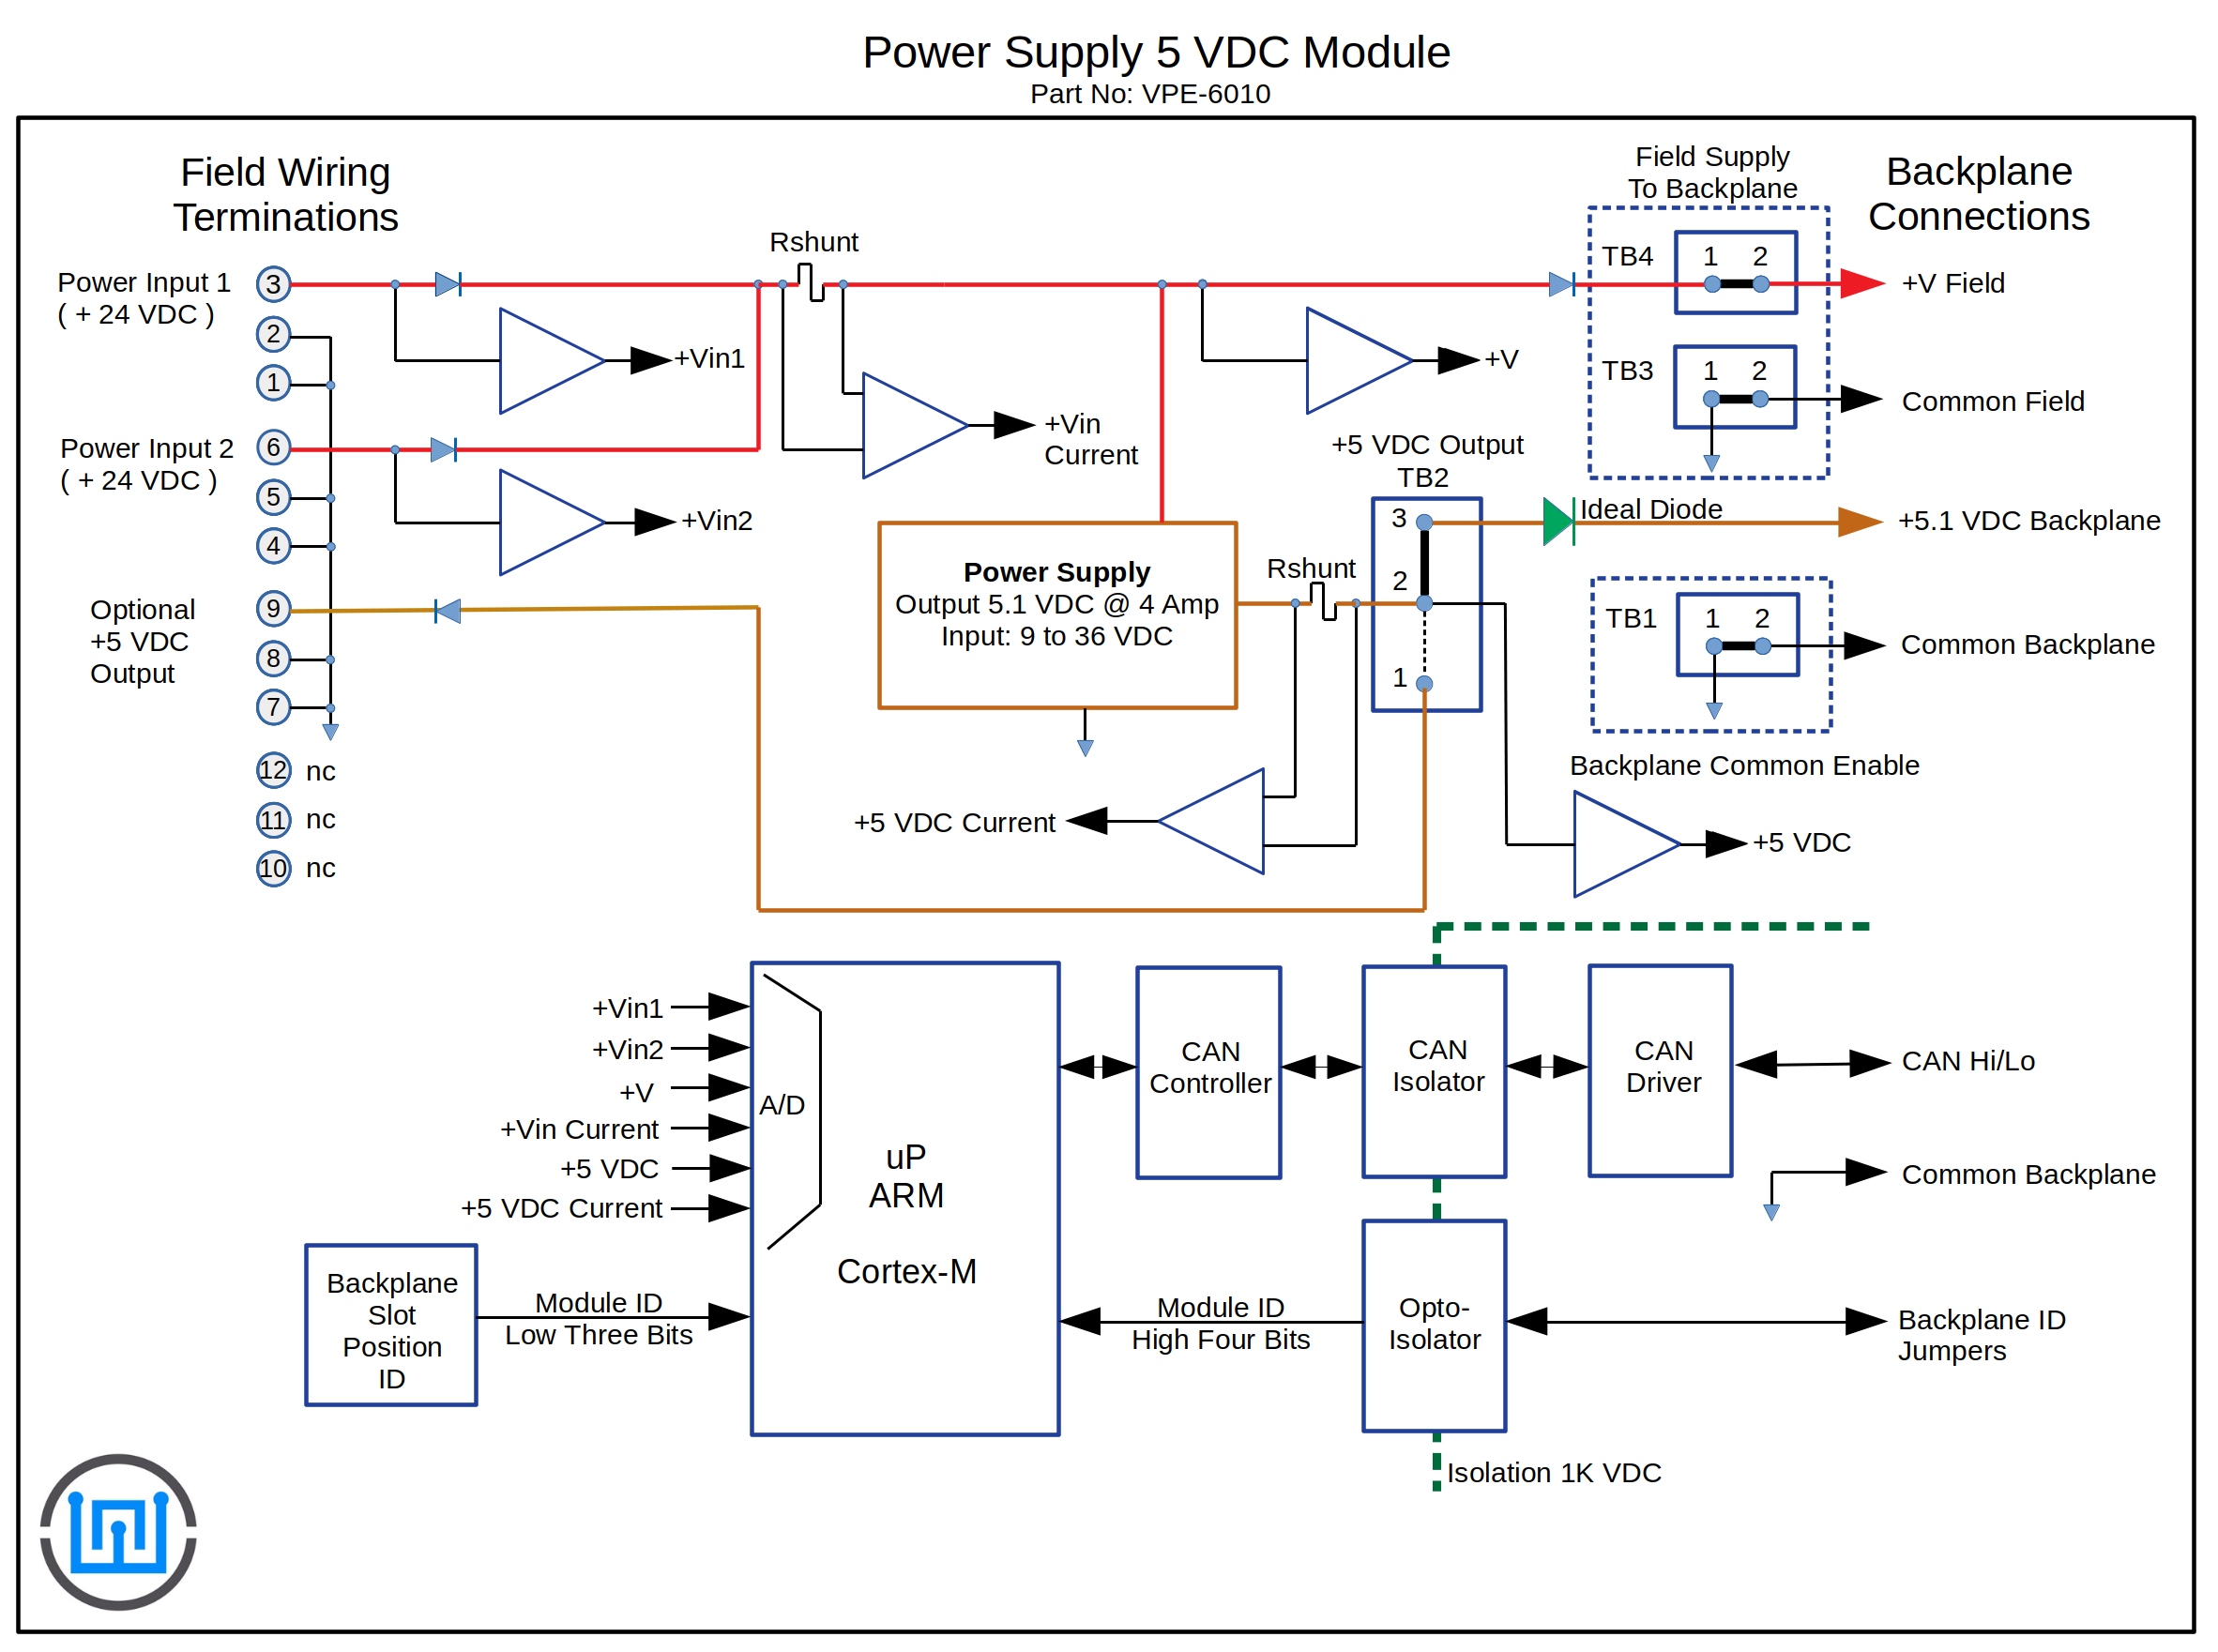 VPE-6010 Power Supply Block Diagram